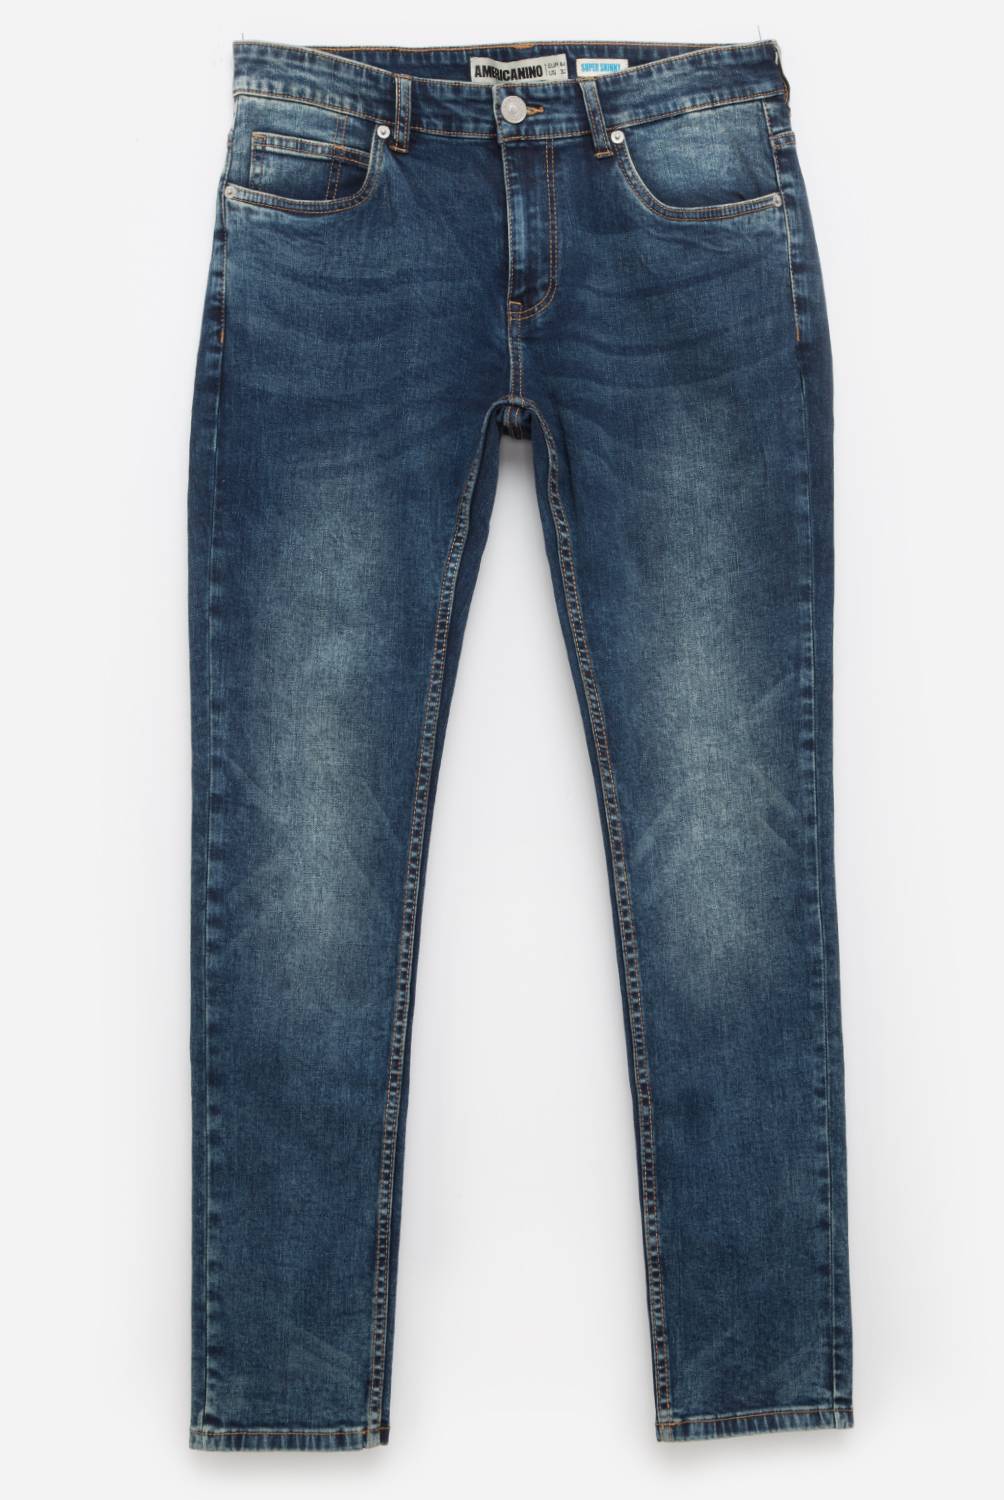 AMERICANINO - Jeans